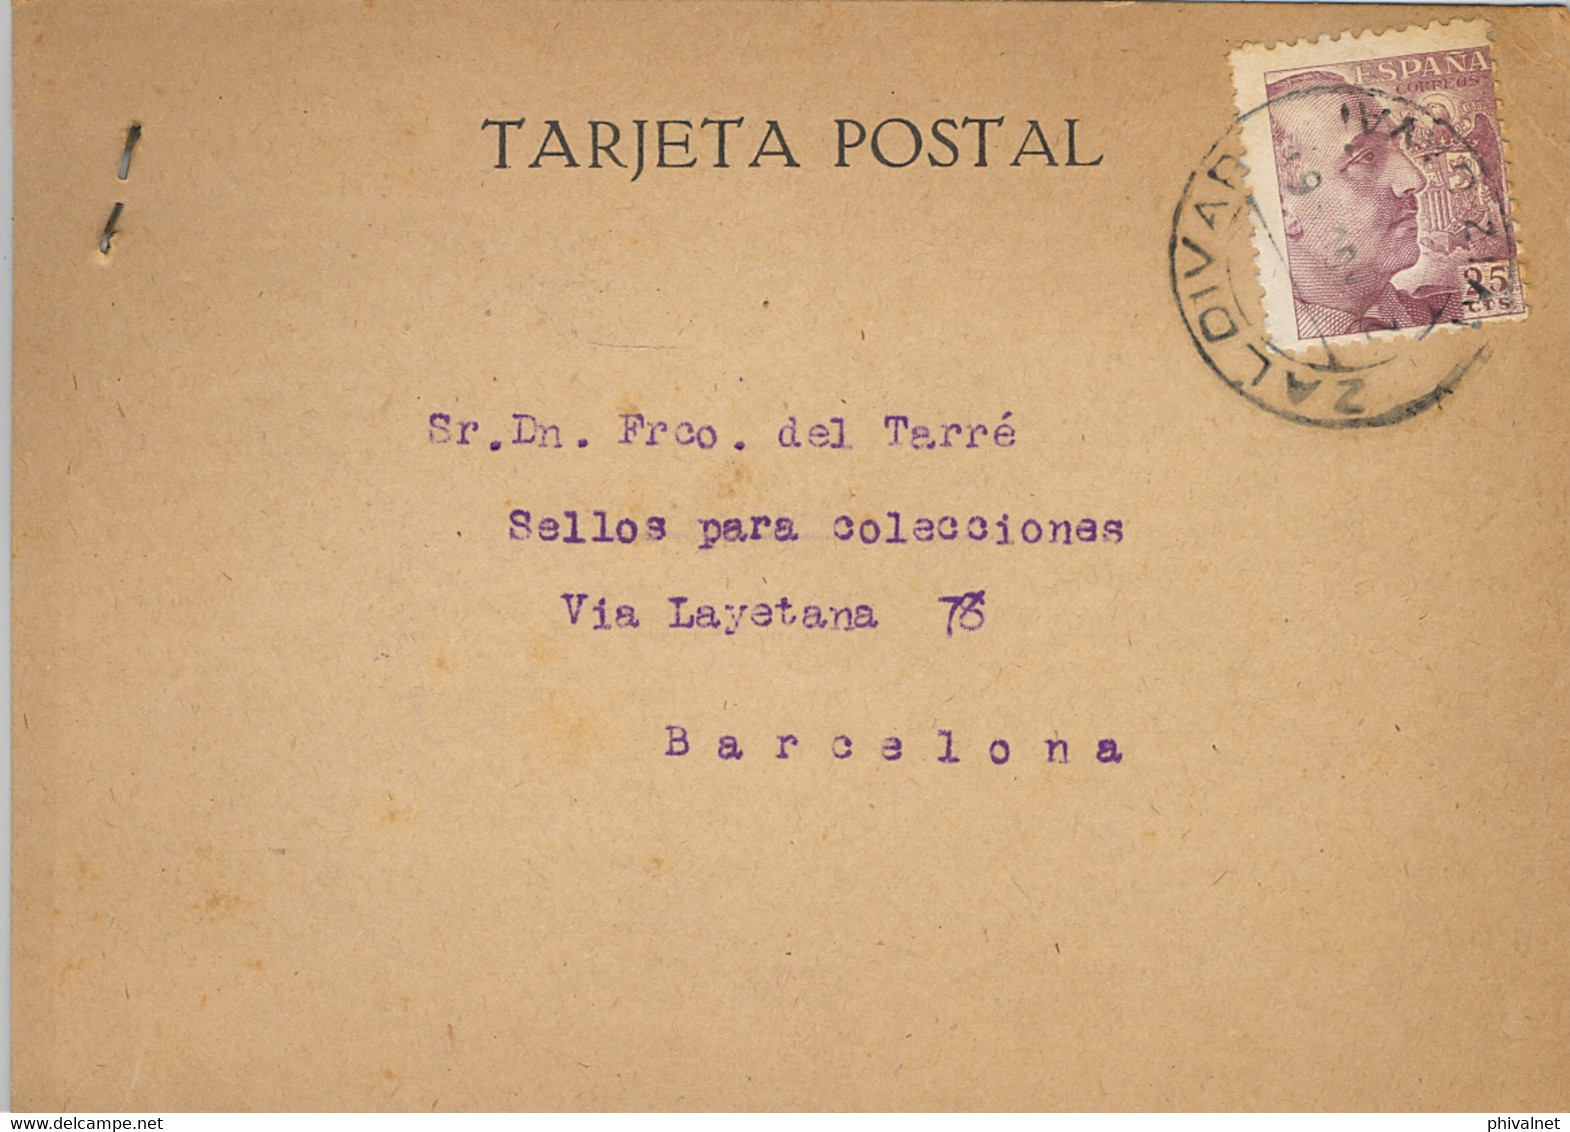 1946 VIZCAYA , T.P. CIRCULADA ENTRE ZALDIVAR Y BARCELONA , DIRIGIDA A FRANCISCO DEL TARRÉ - Covers & Documents